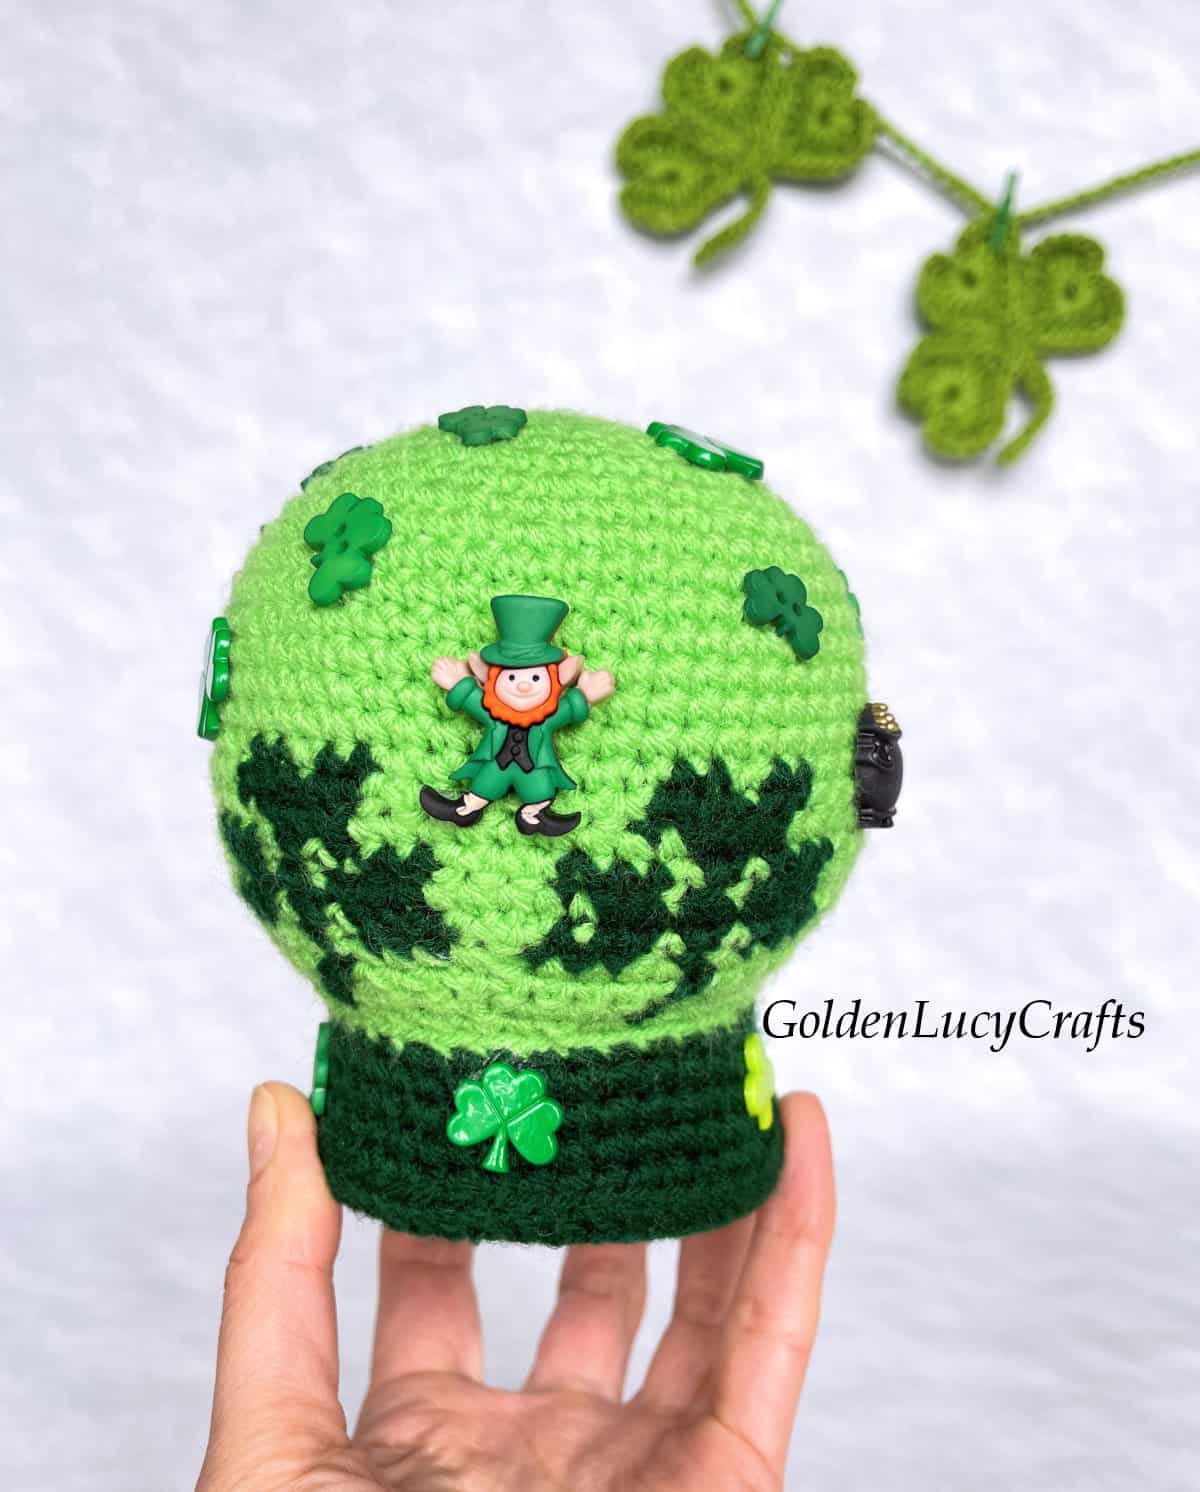 Crochet St. Patrick's Day snow globe amigurumi held by finger tips.